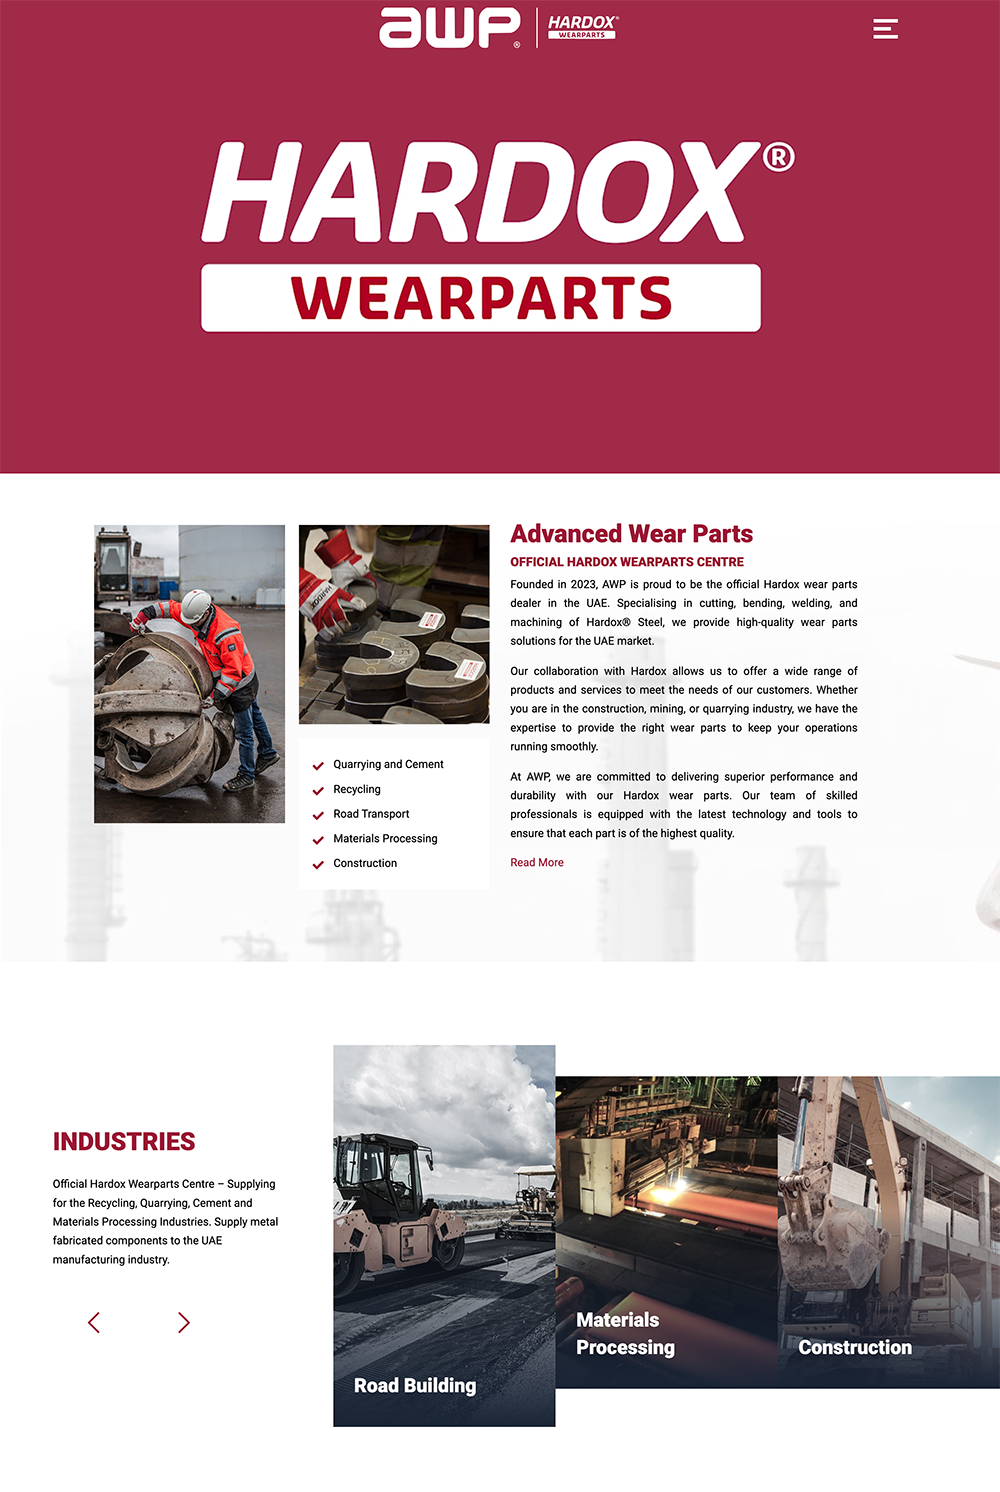 Advanced Wear Parts (AWP)